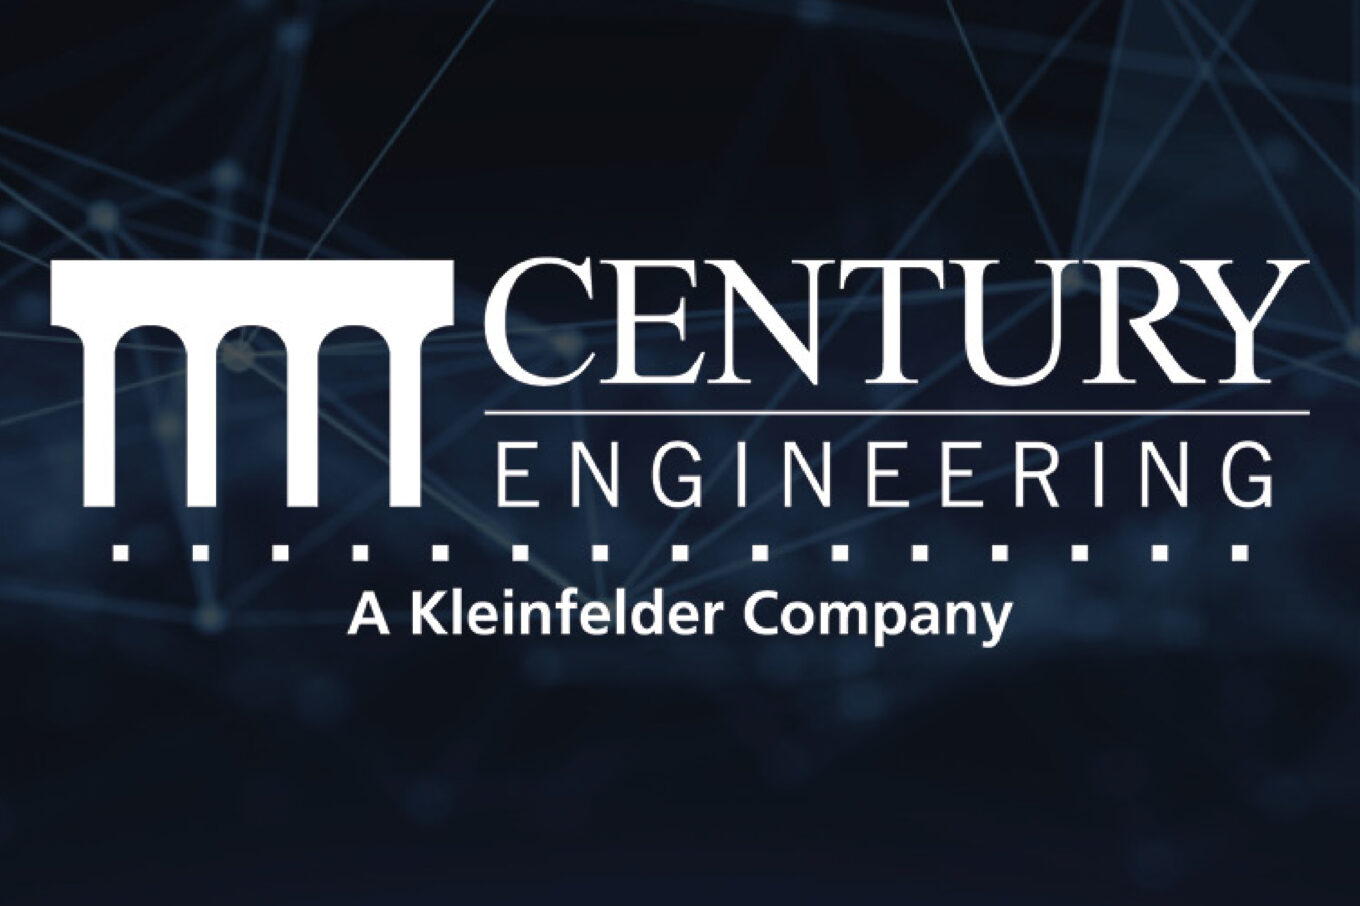 Kleinfelder Acquires Century Engineering